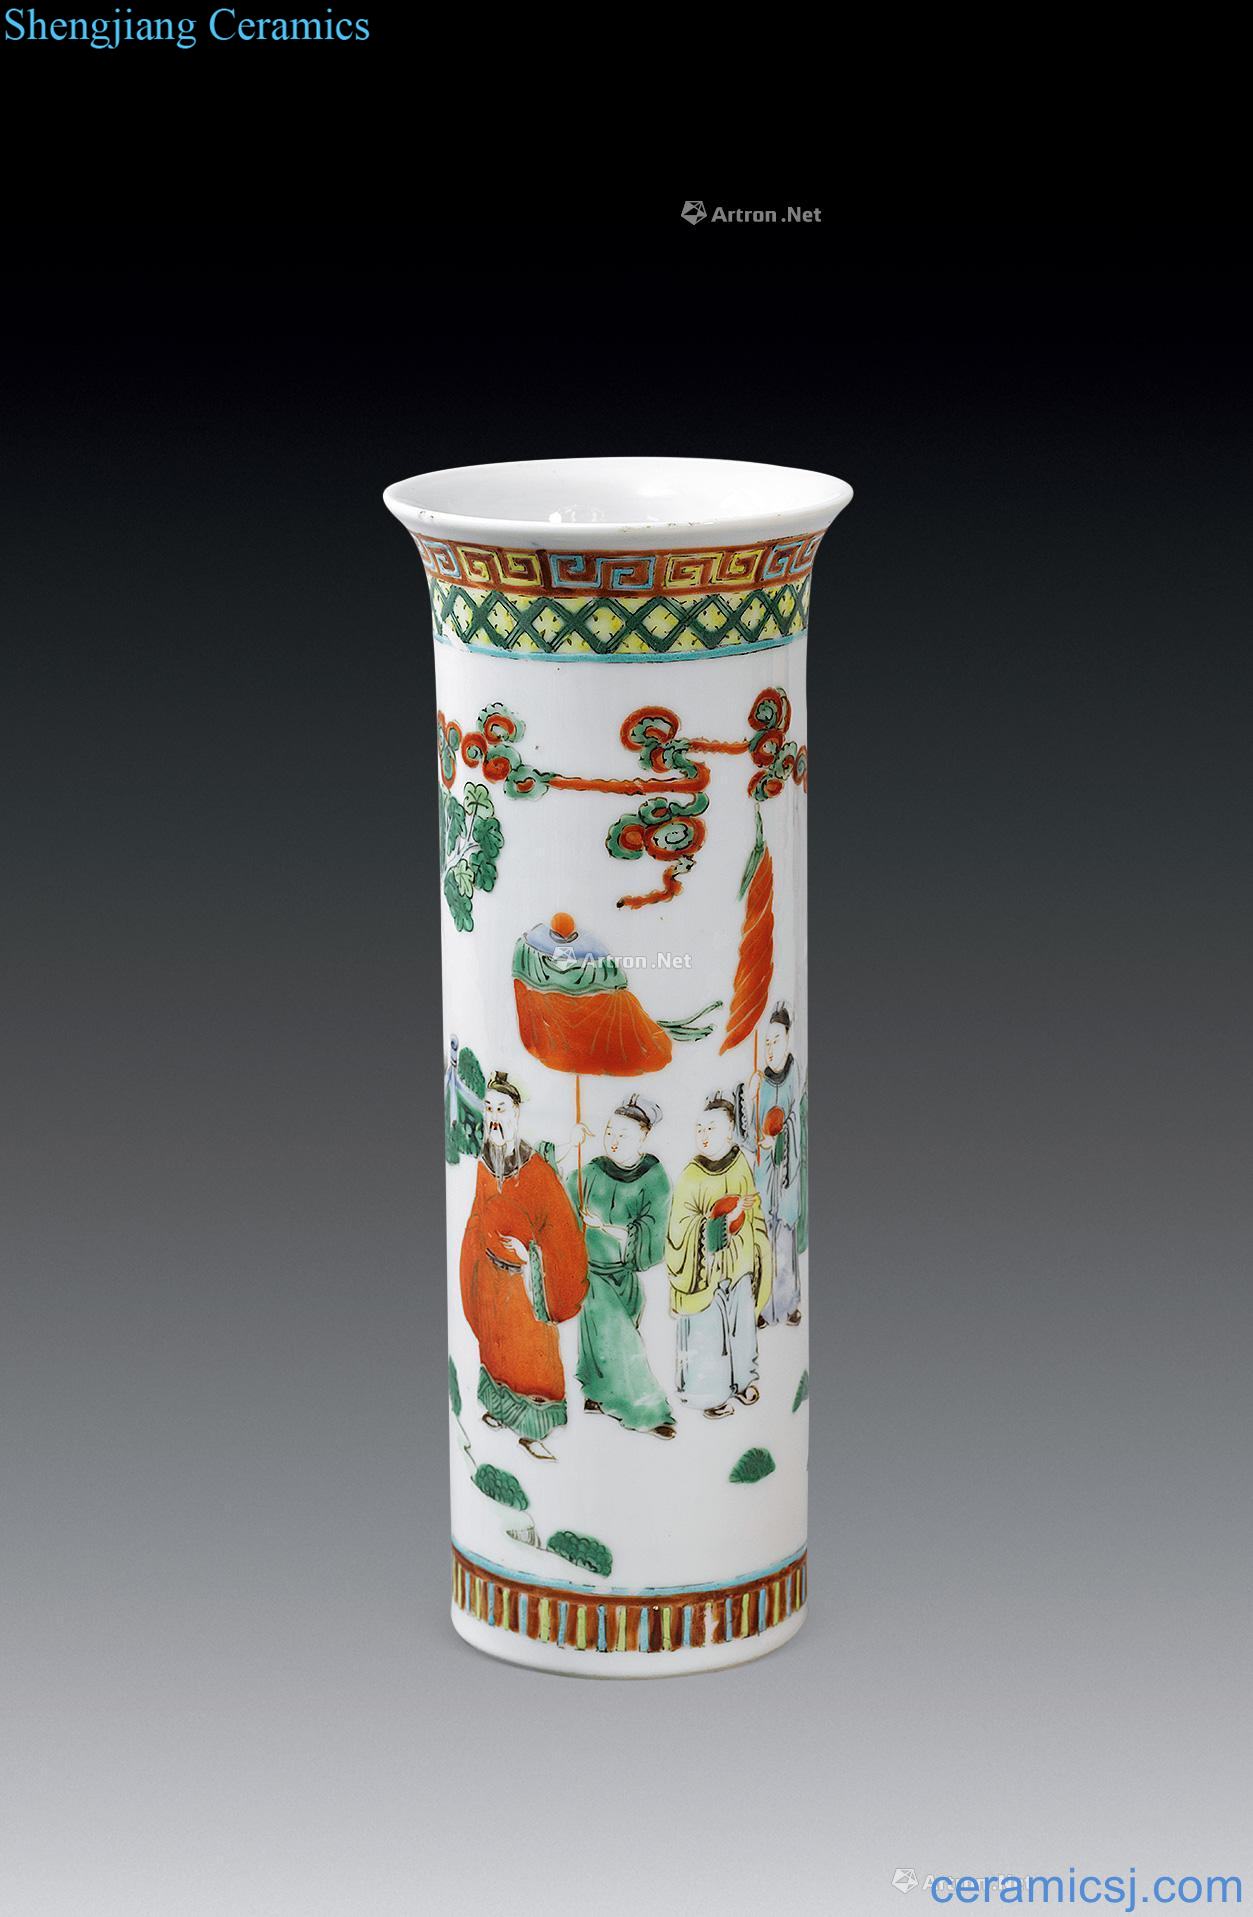 In the qing dynasty pastel Wen Wangfang xian wen vase with flowers